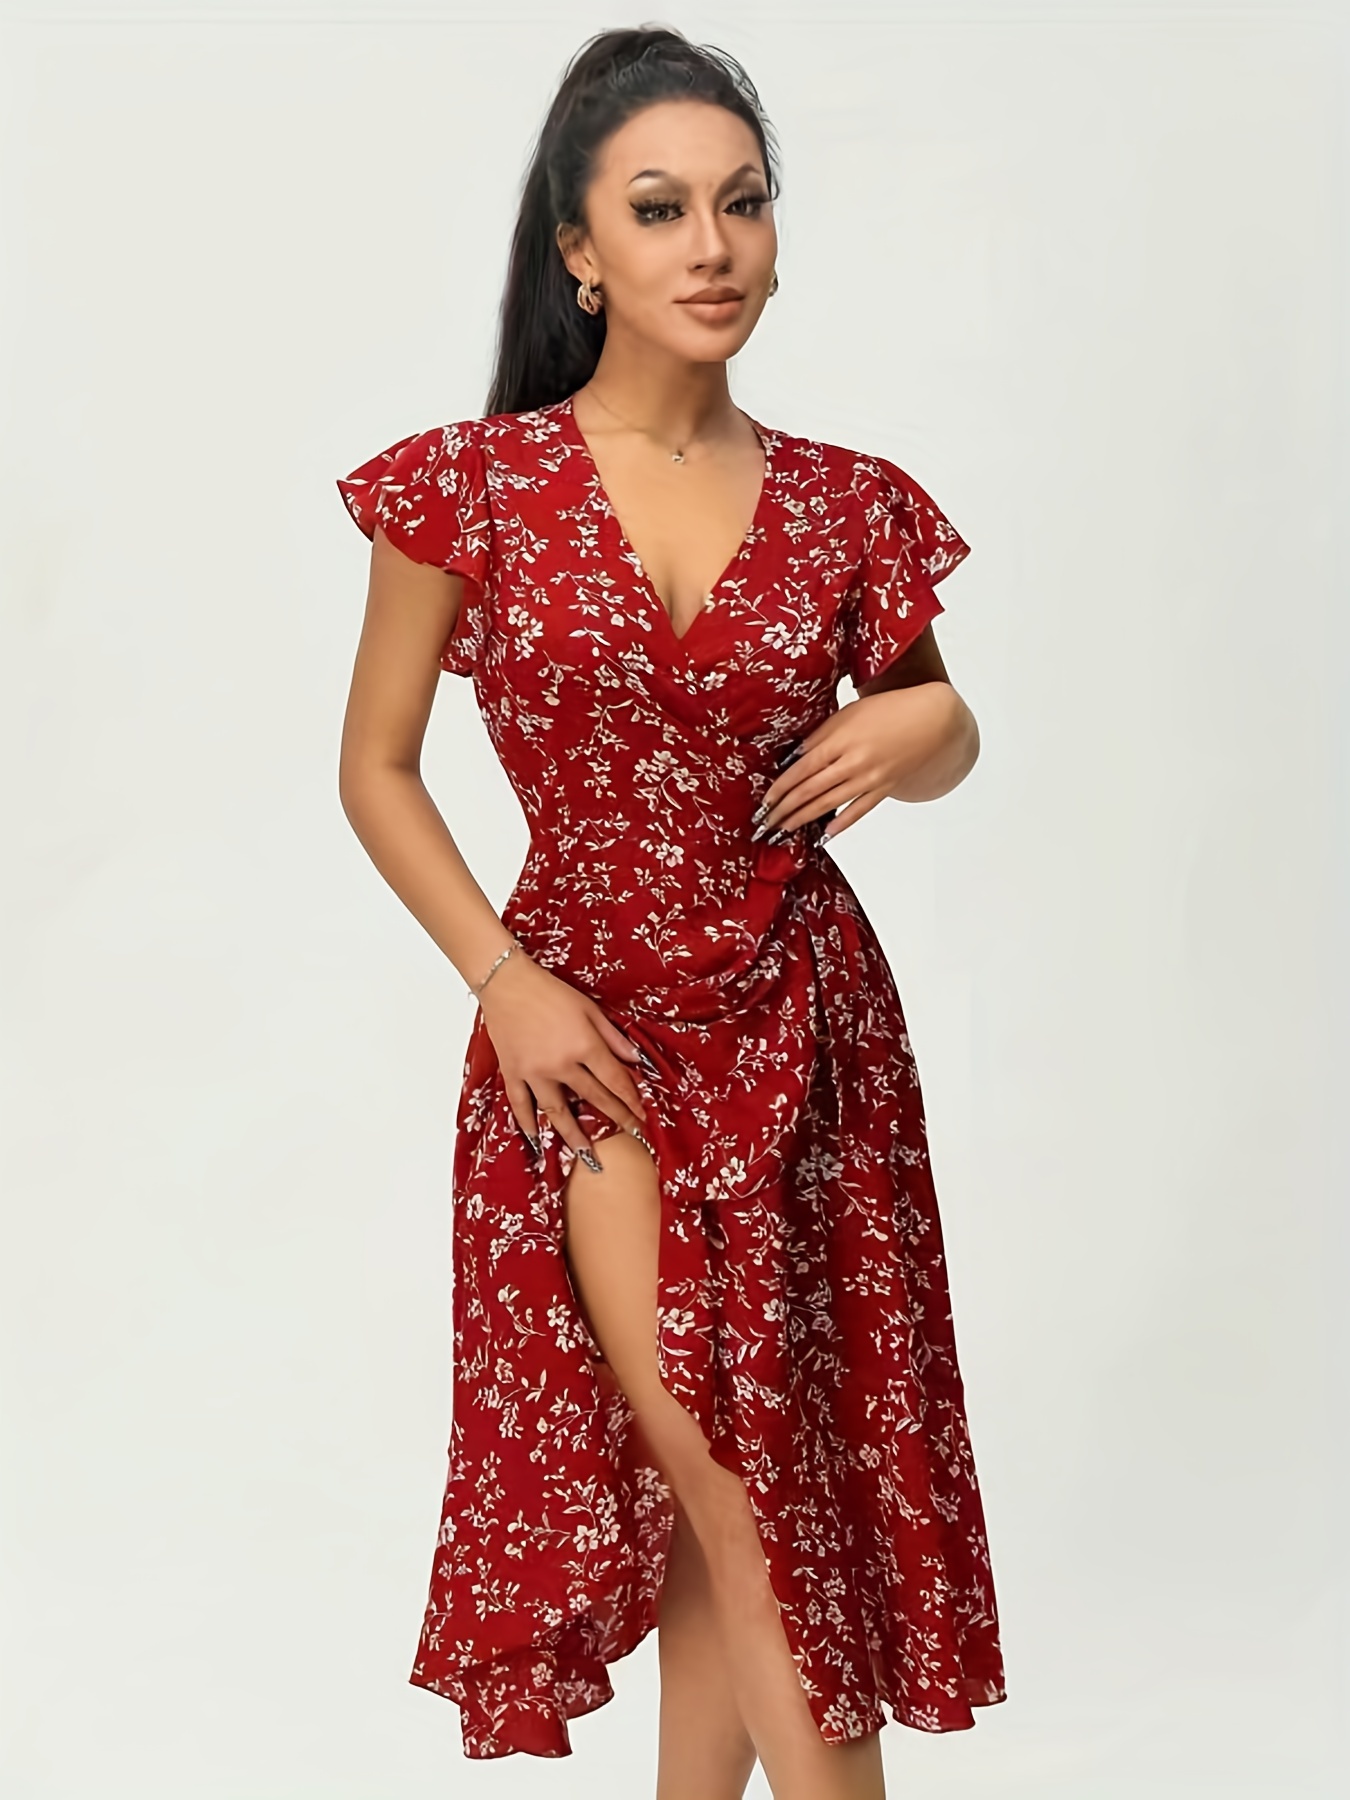 fvwitlyh Skims Dress Women's Casual Floral Print V Neck Short Sleeve Summer  Boho Beach Dress High Waist Long Maxi Dresses 